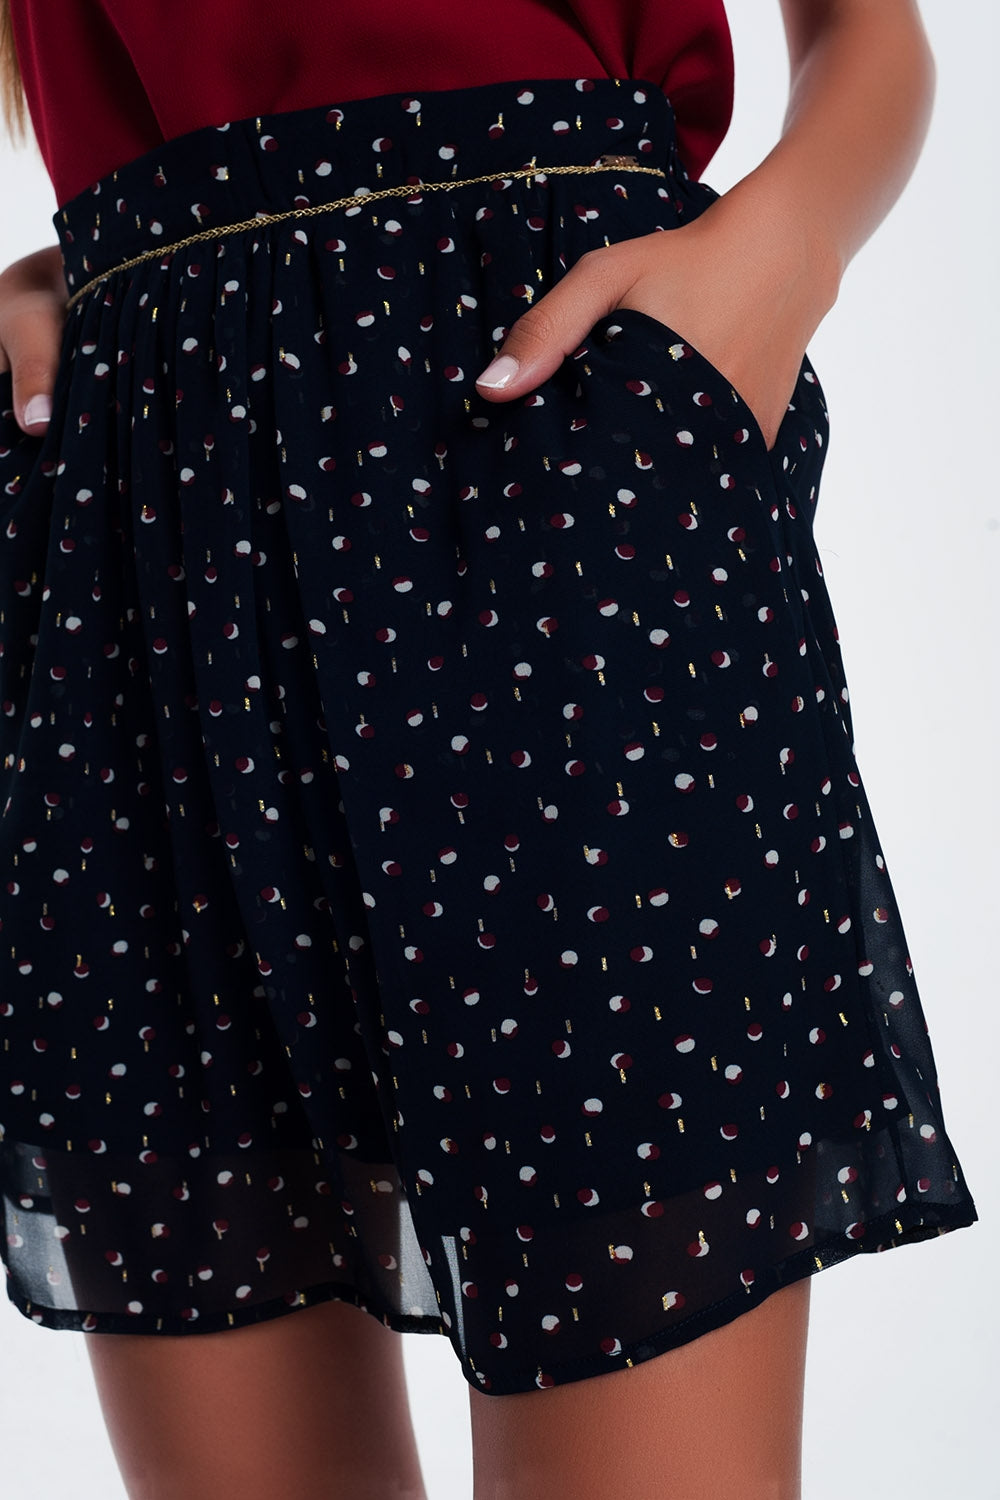 Q2 Mini skirt navy in scribble polka dot